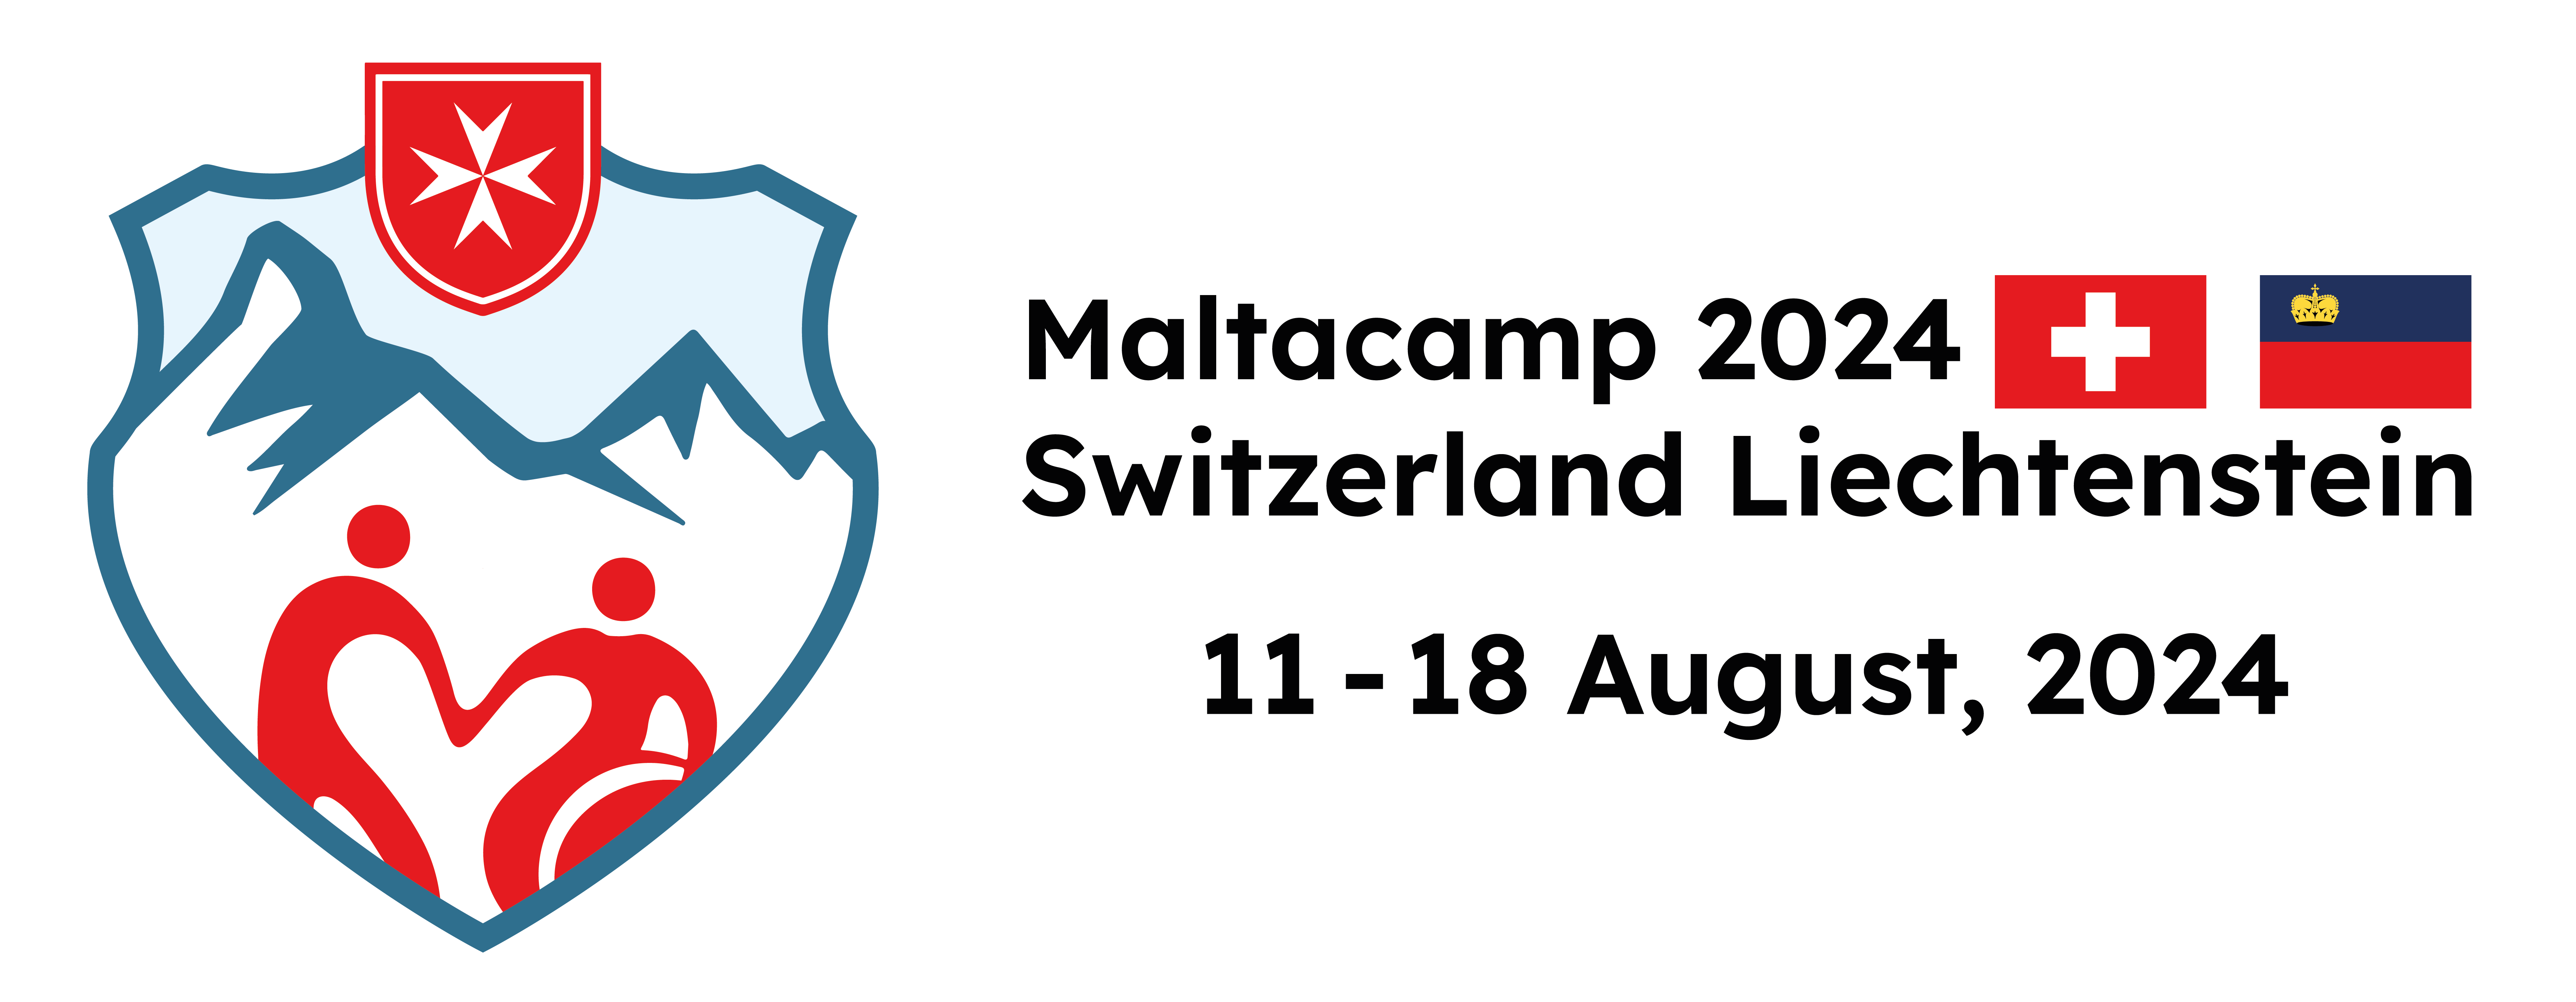 Maltacamp 2024